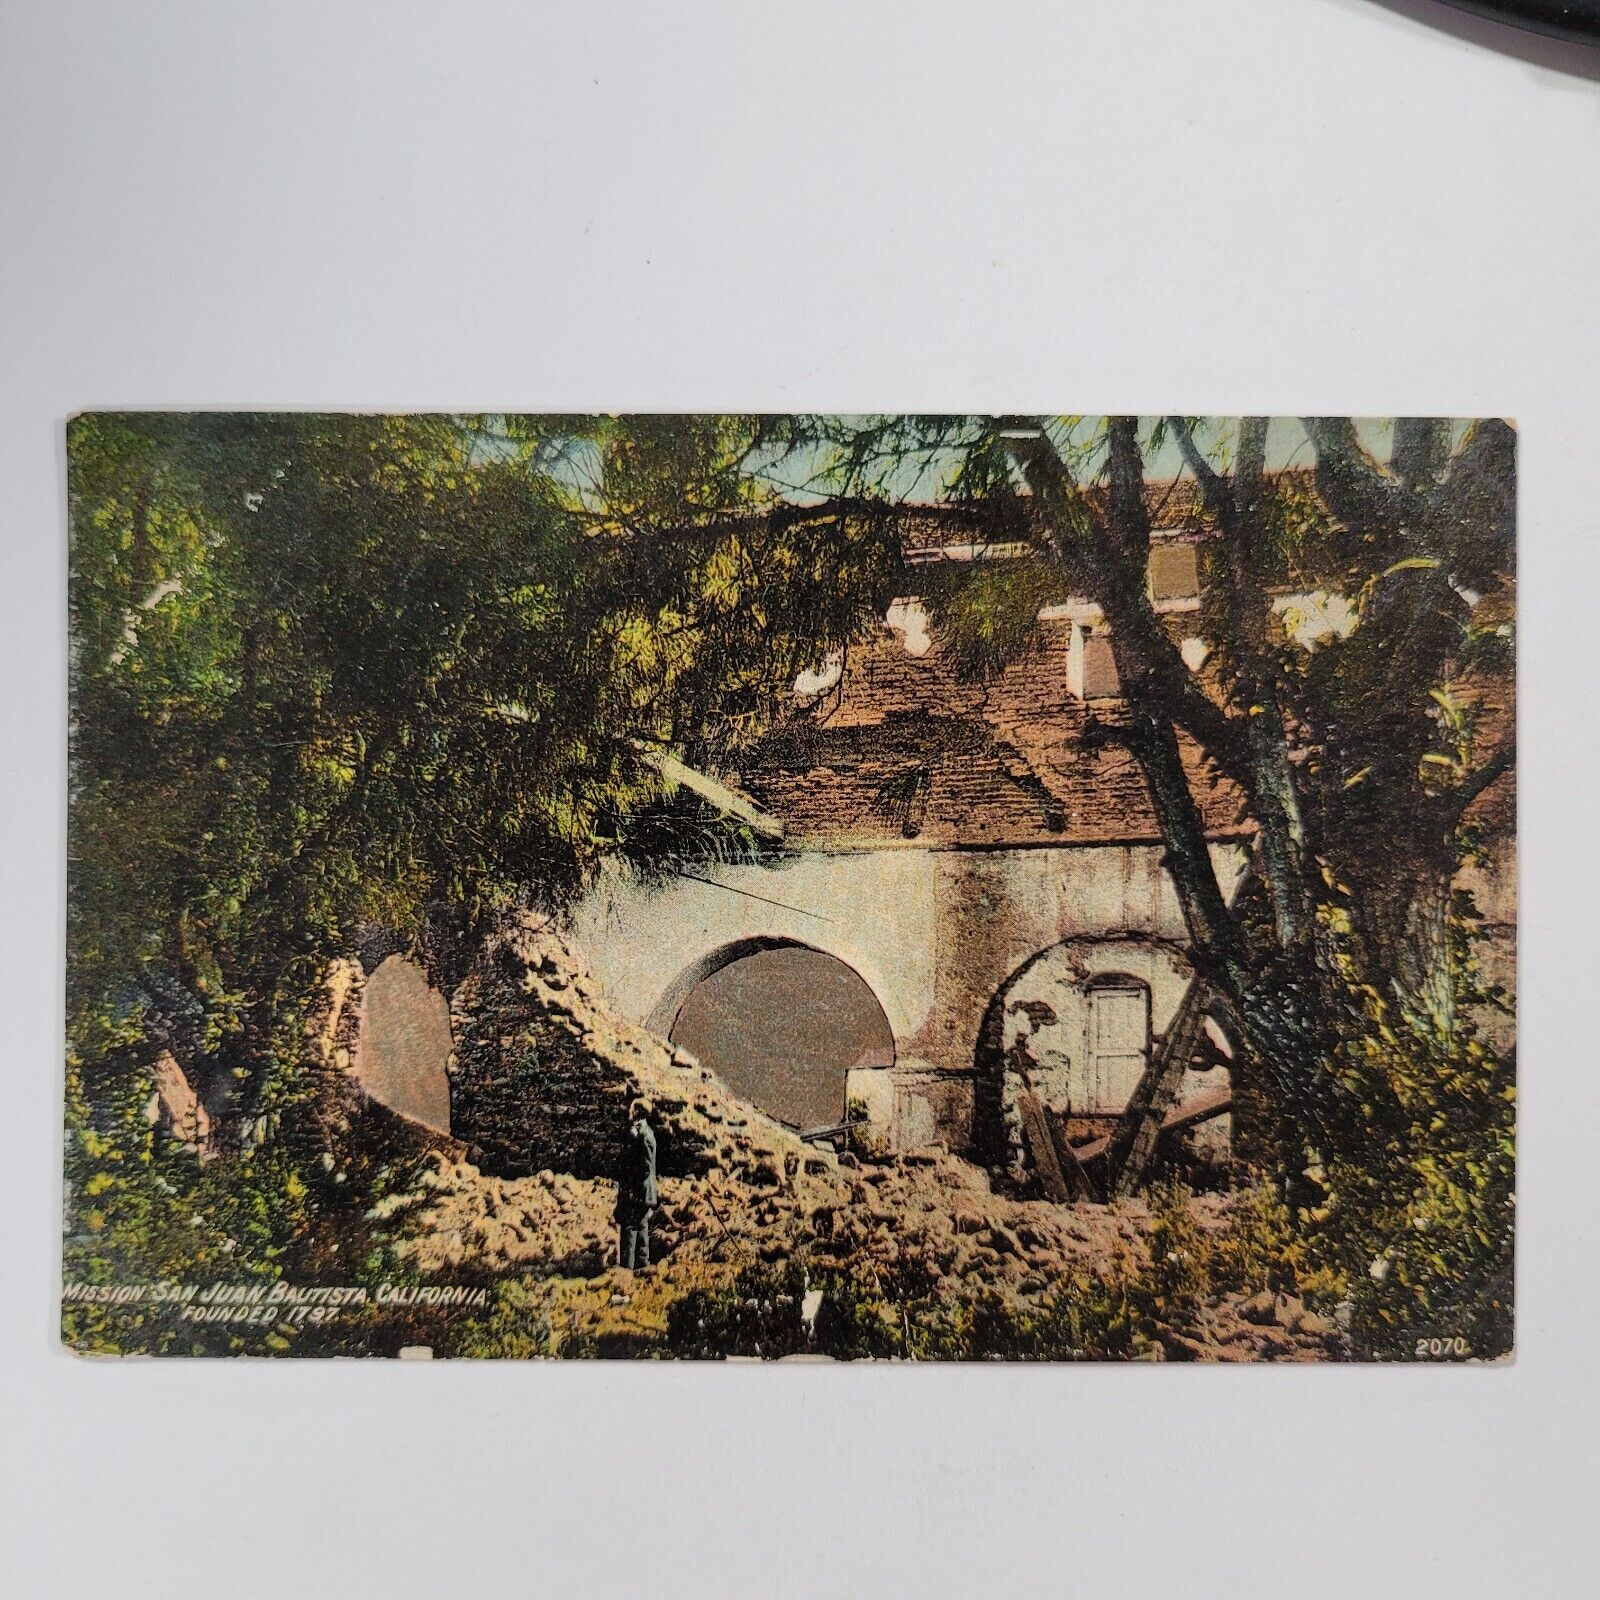 Vintage Postcard Ruins of Mission San Juan Bautista CA California Posted c1910s